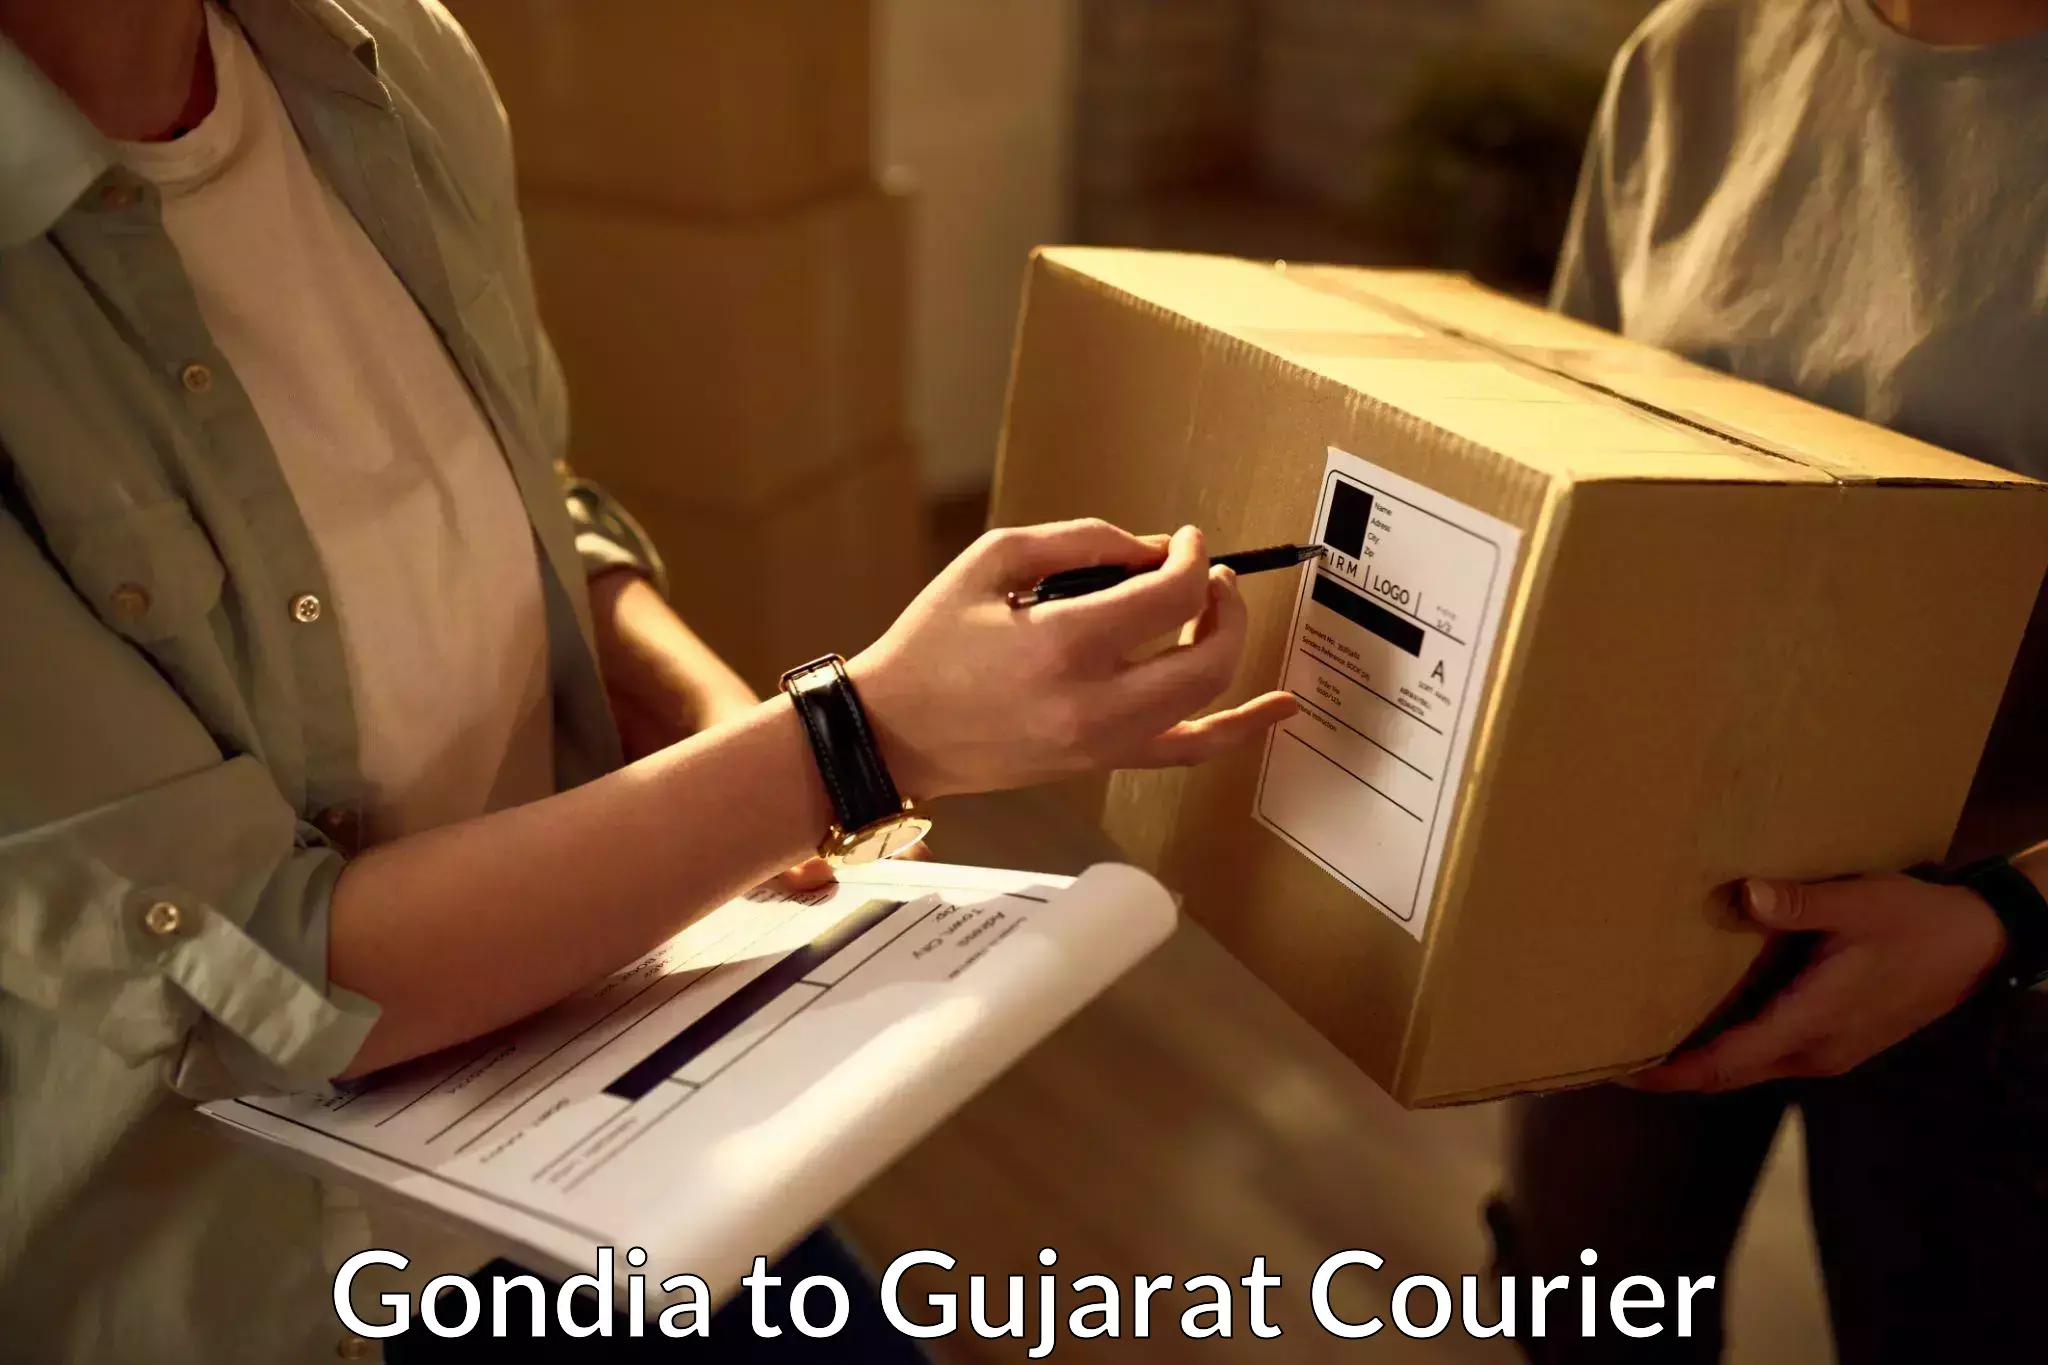 Digital courier platforms Gondia to Dwarka